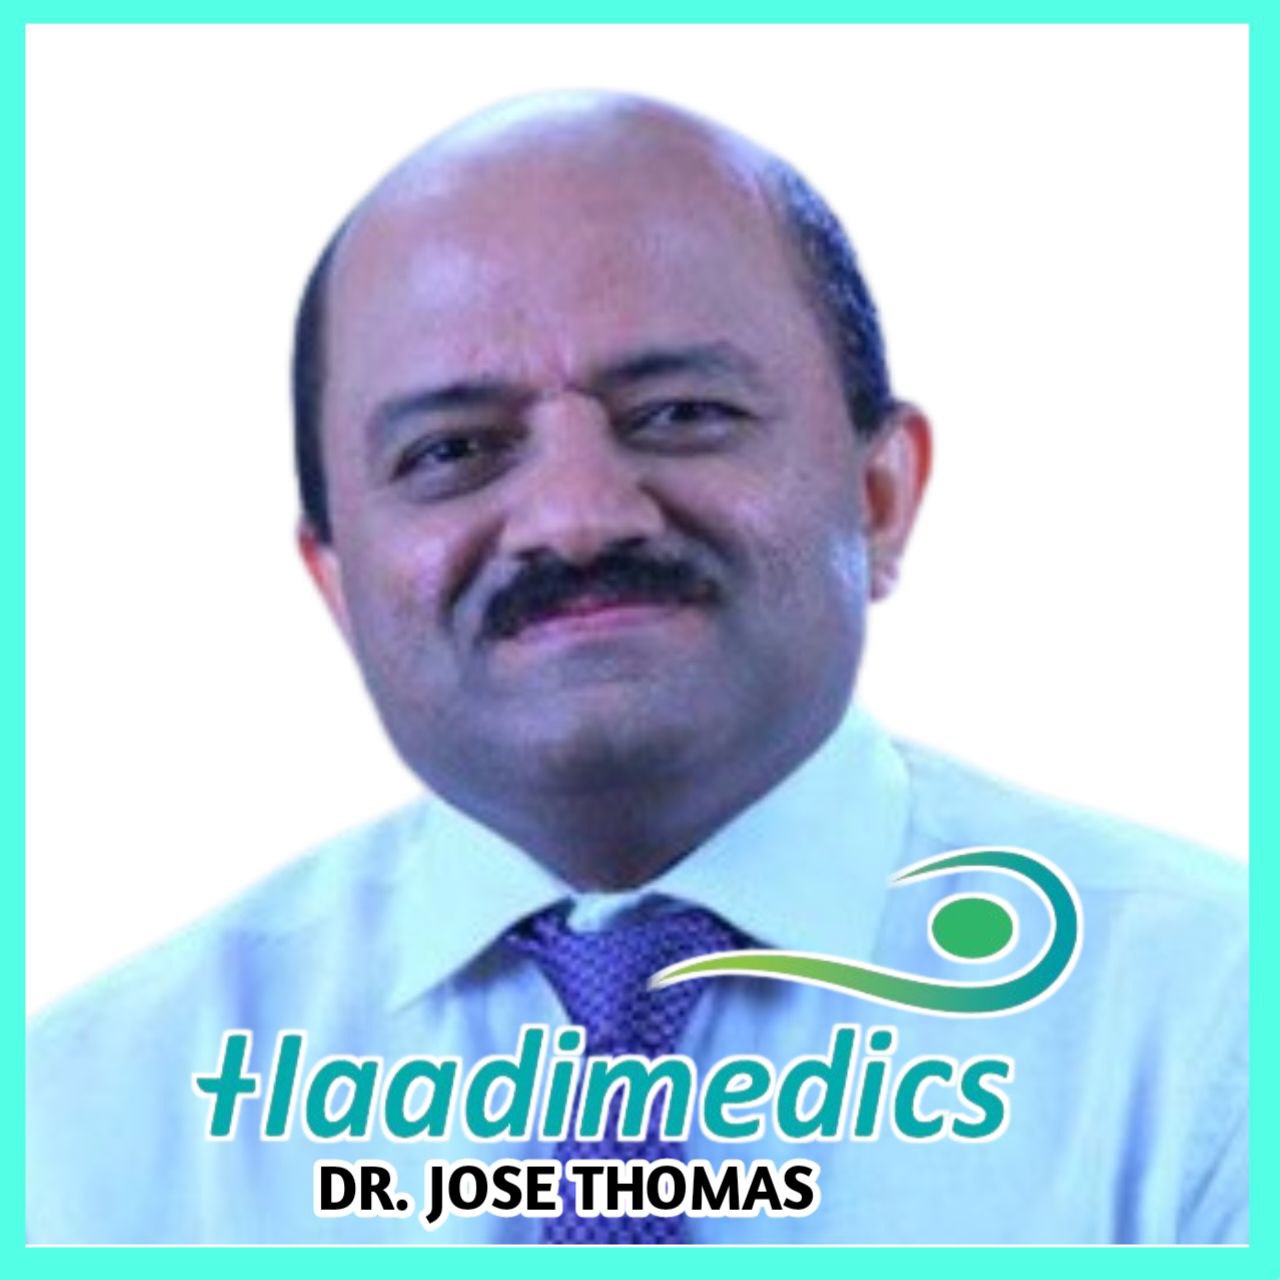 Dr. Jose Thomas